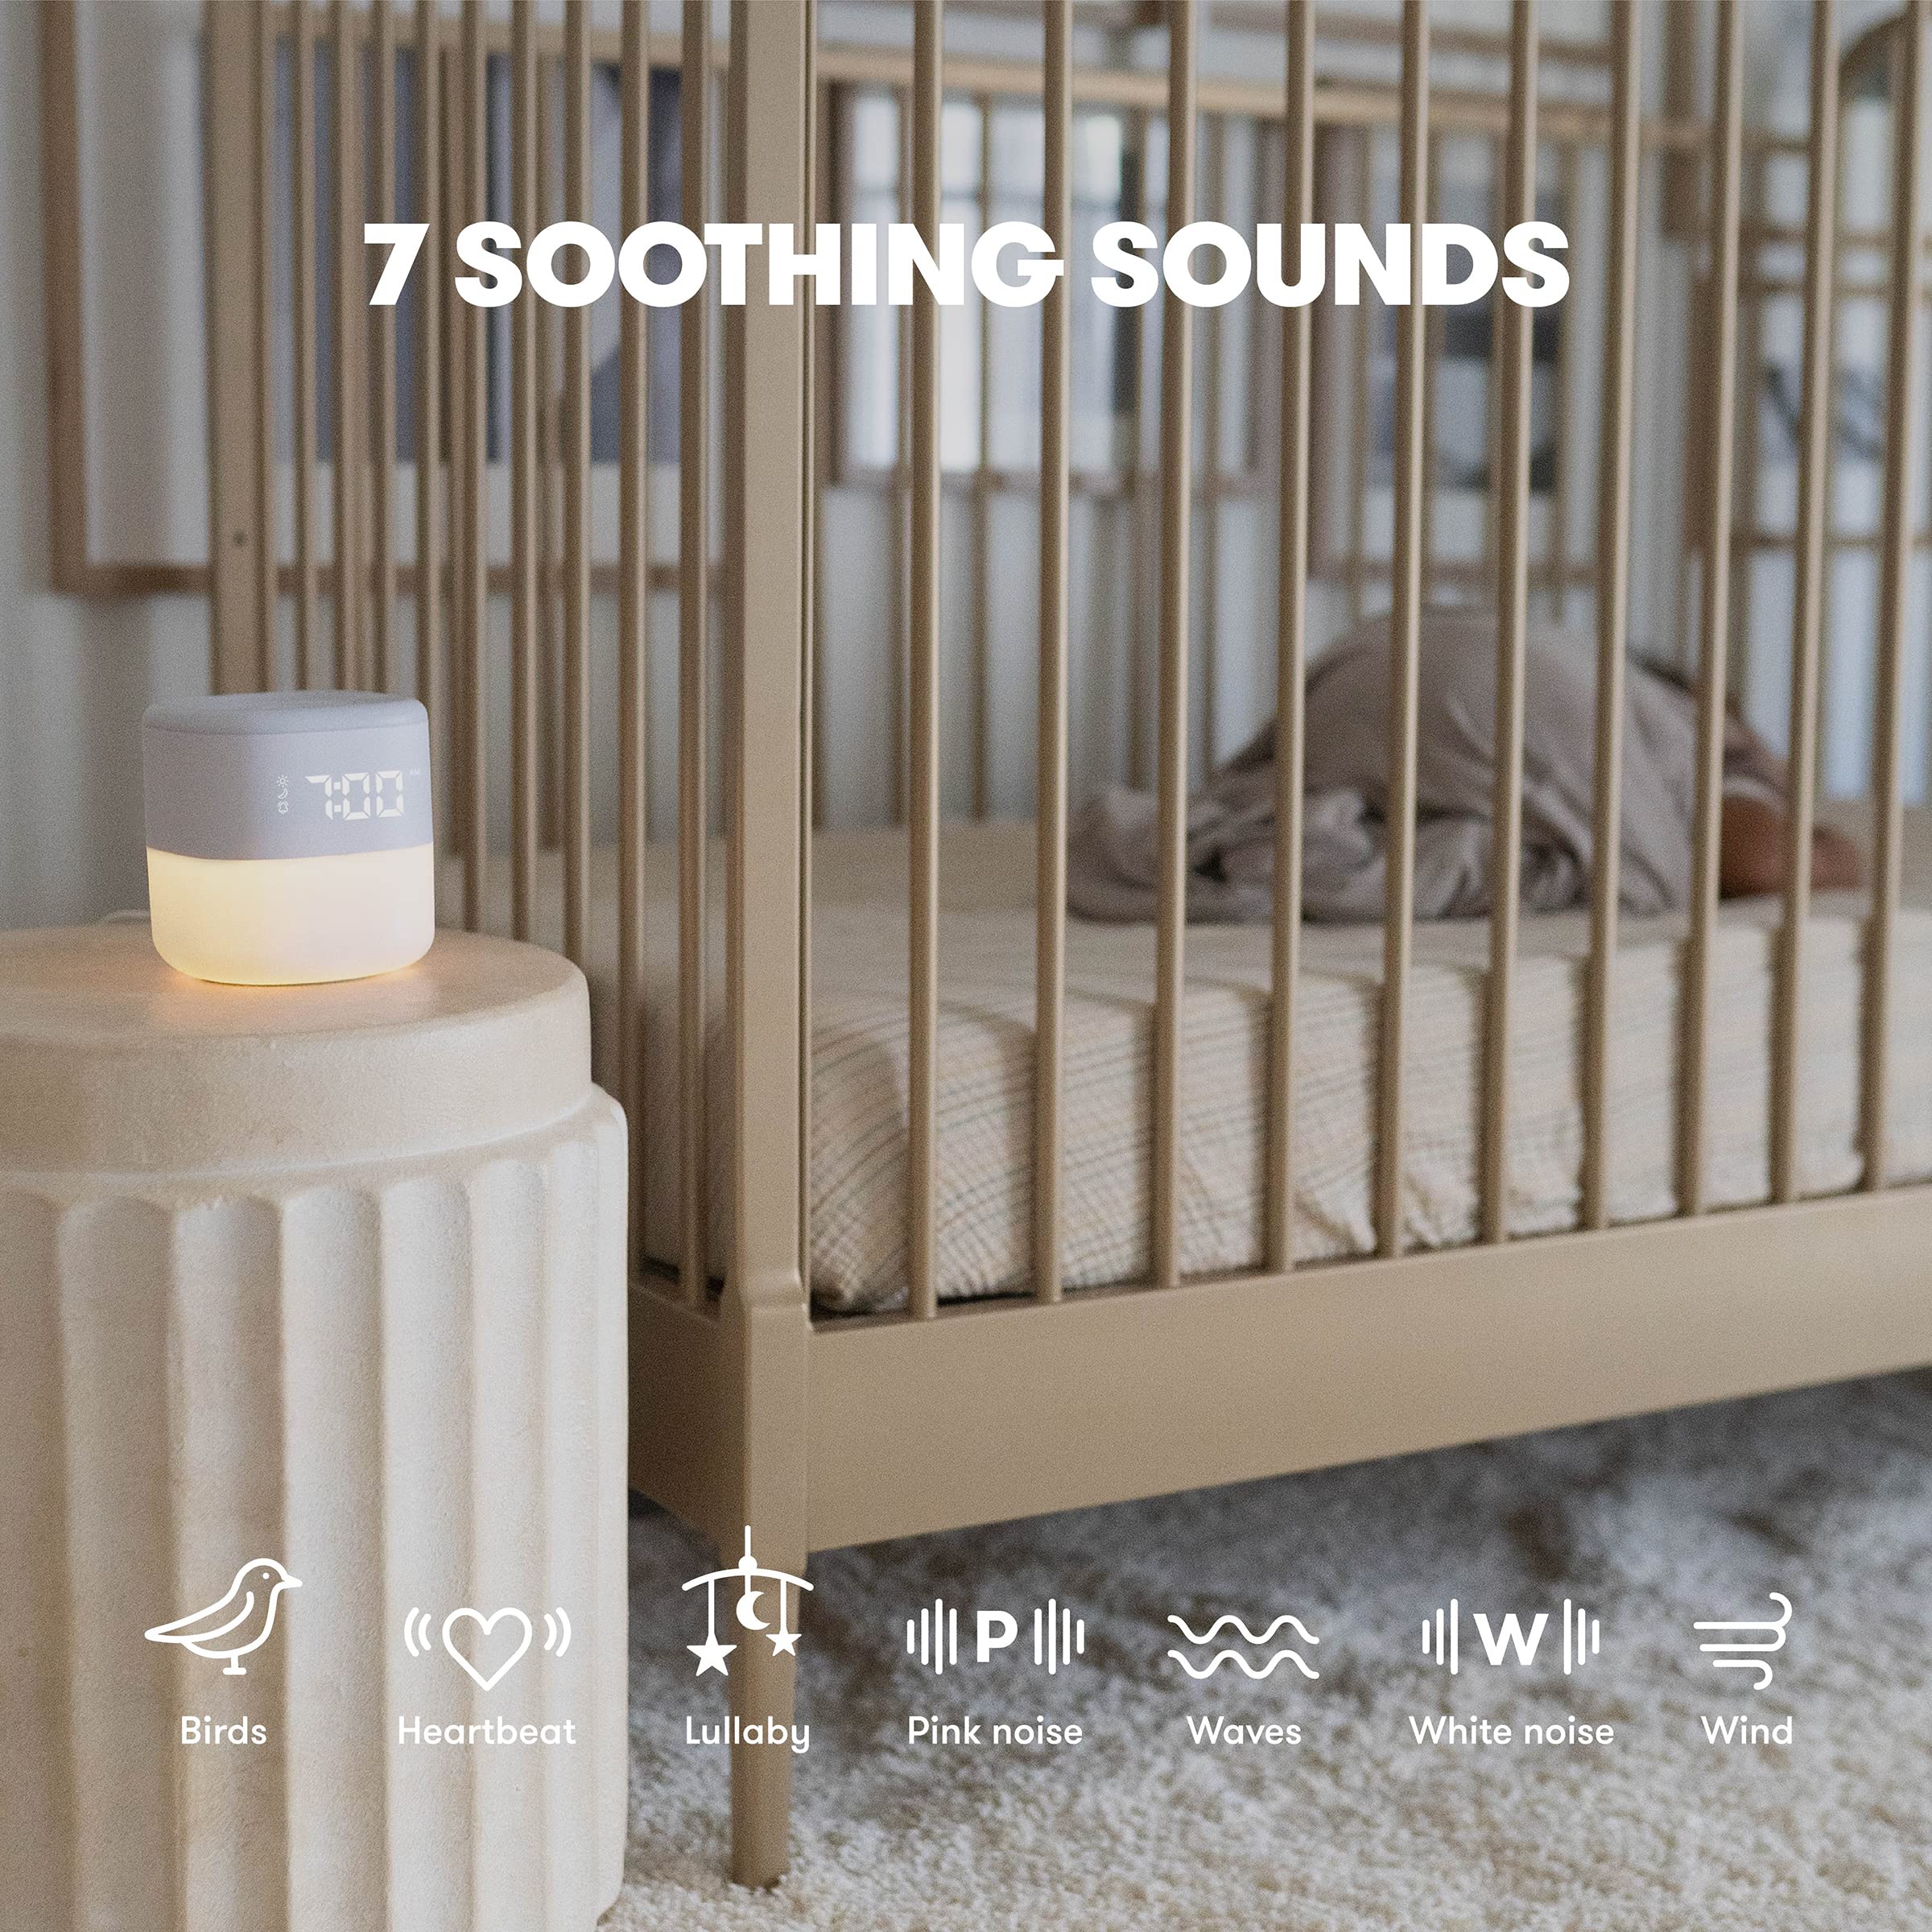 Frida Baby 3-in-1 Sound Machine + When-to-Wake Clock + Nightlight | White Noise Soother, Sleep Trainer, Alarm Clock, Nursery + Toddler + Kids Bedroom (Bluetooth)